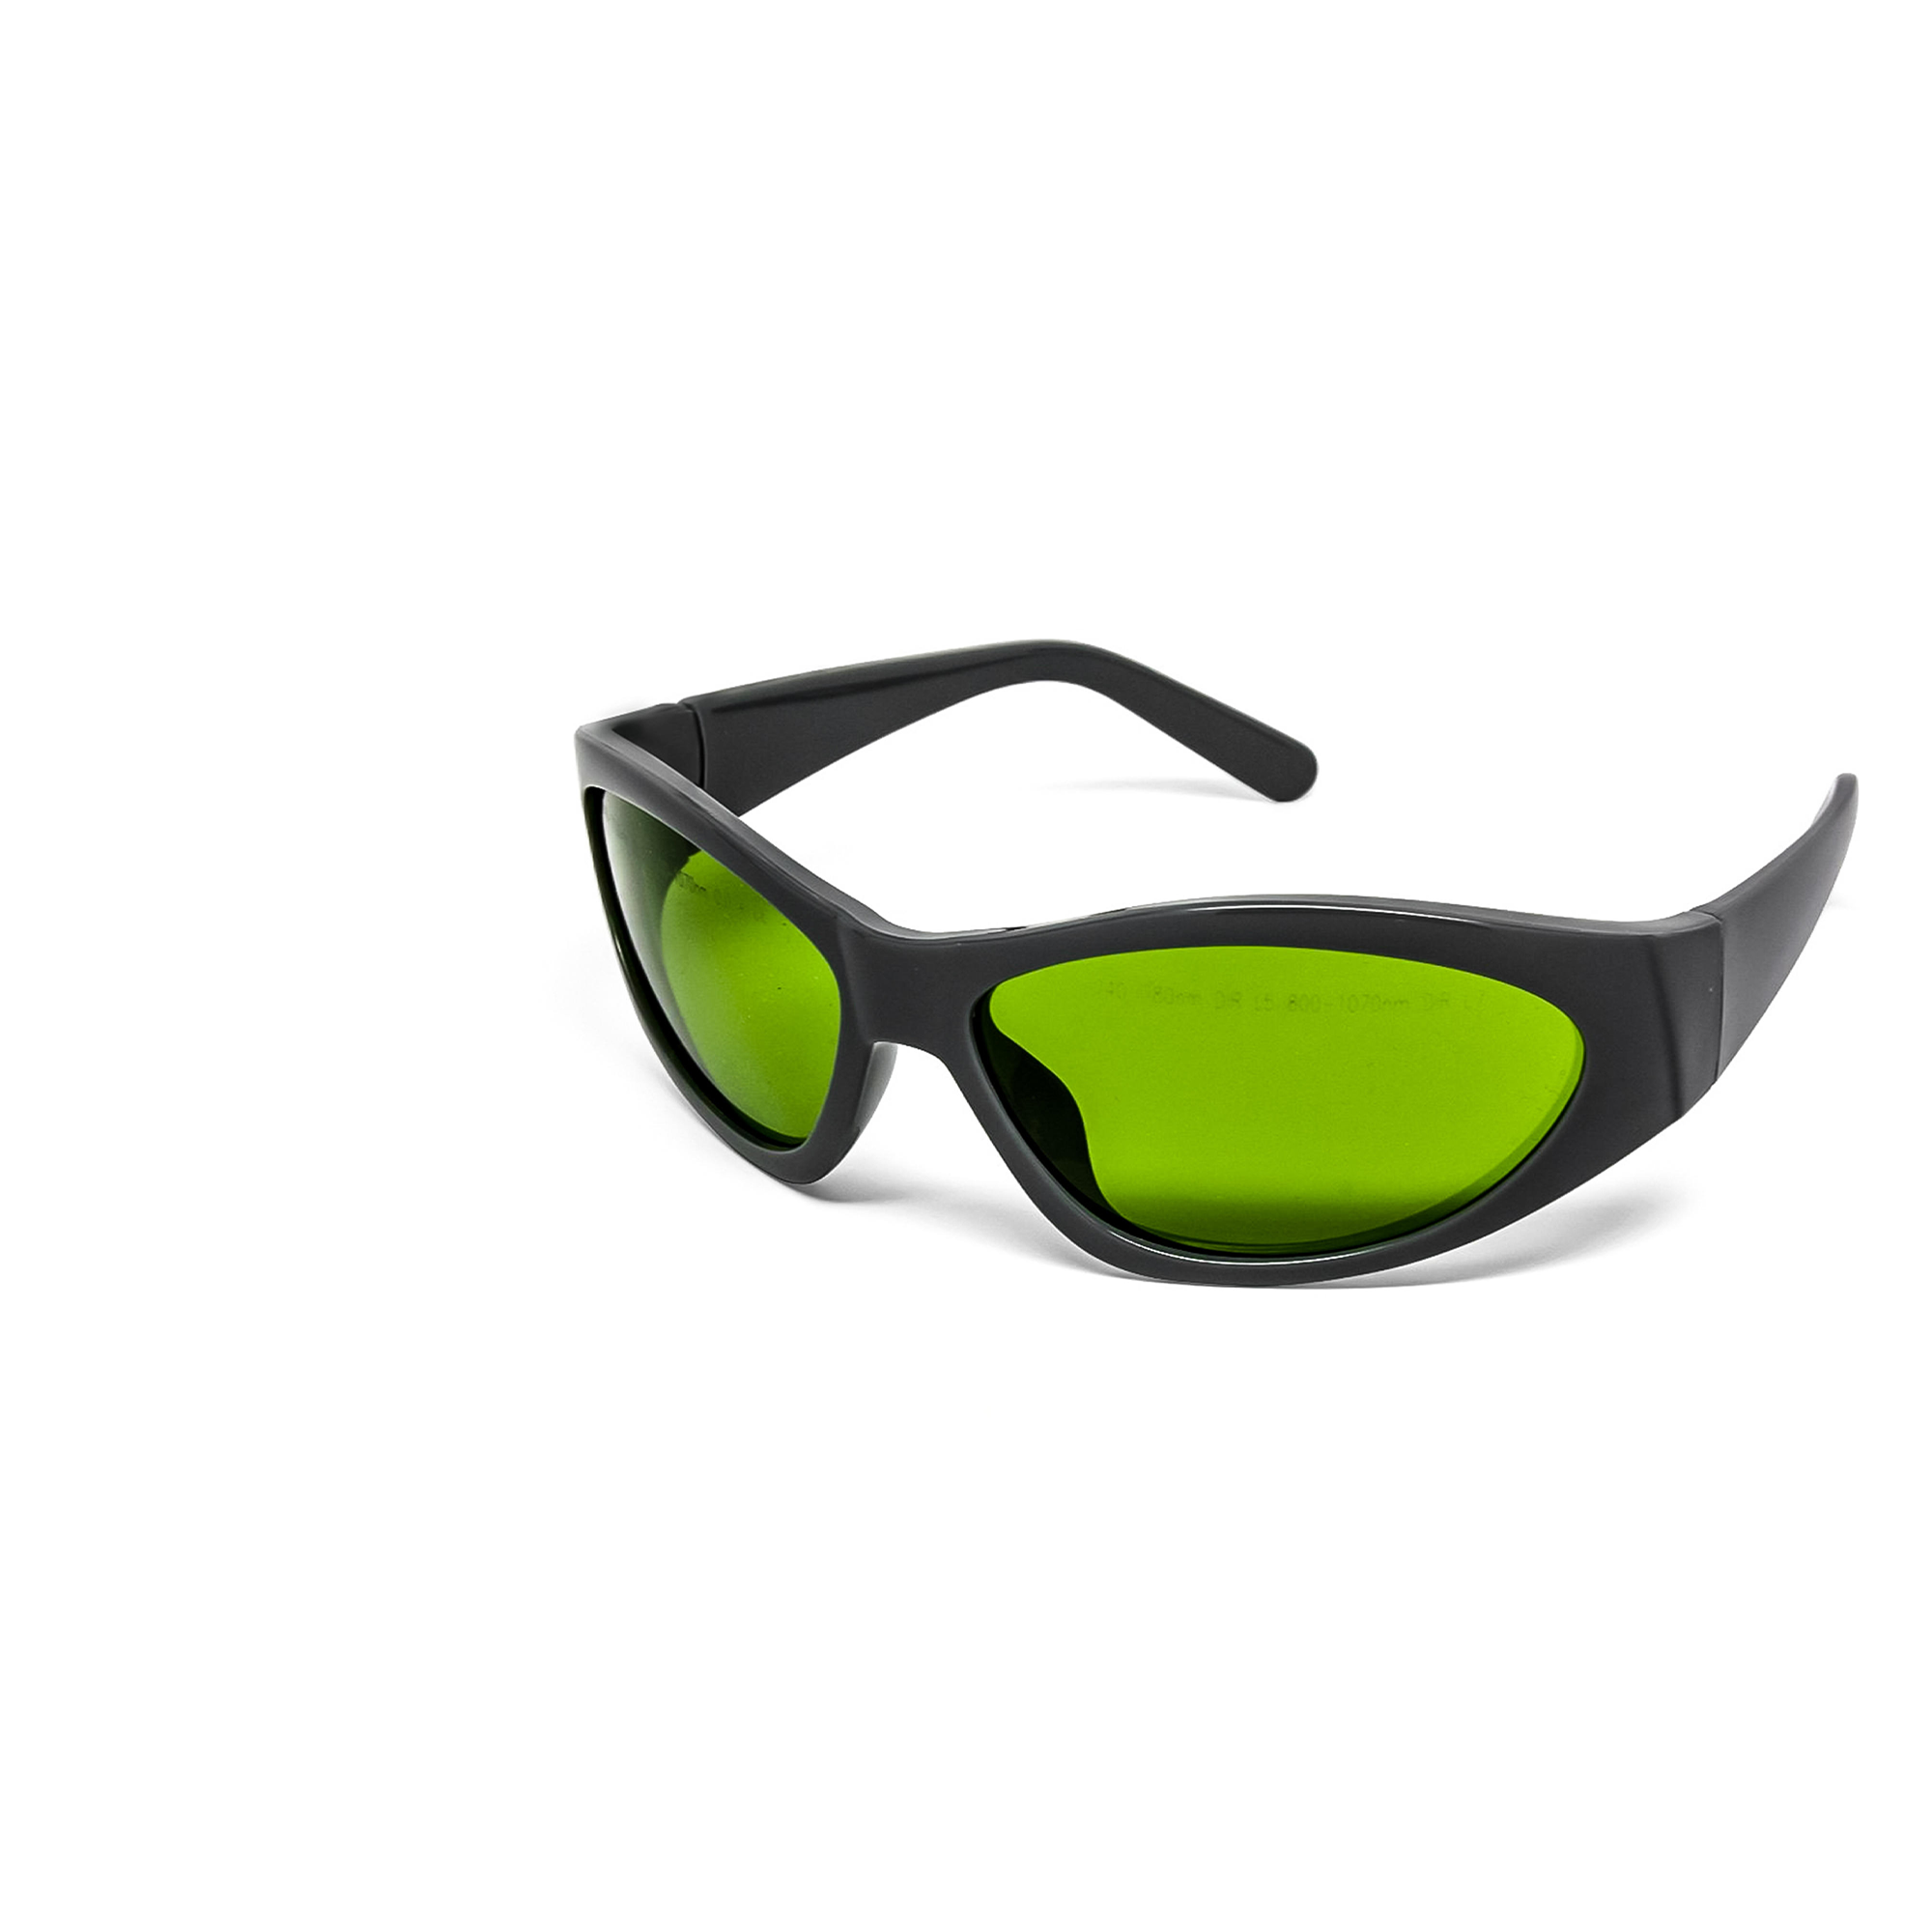 Laser-safety Glasses Goggles